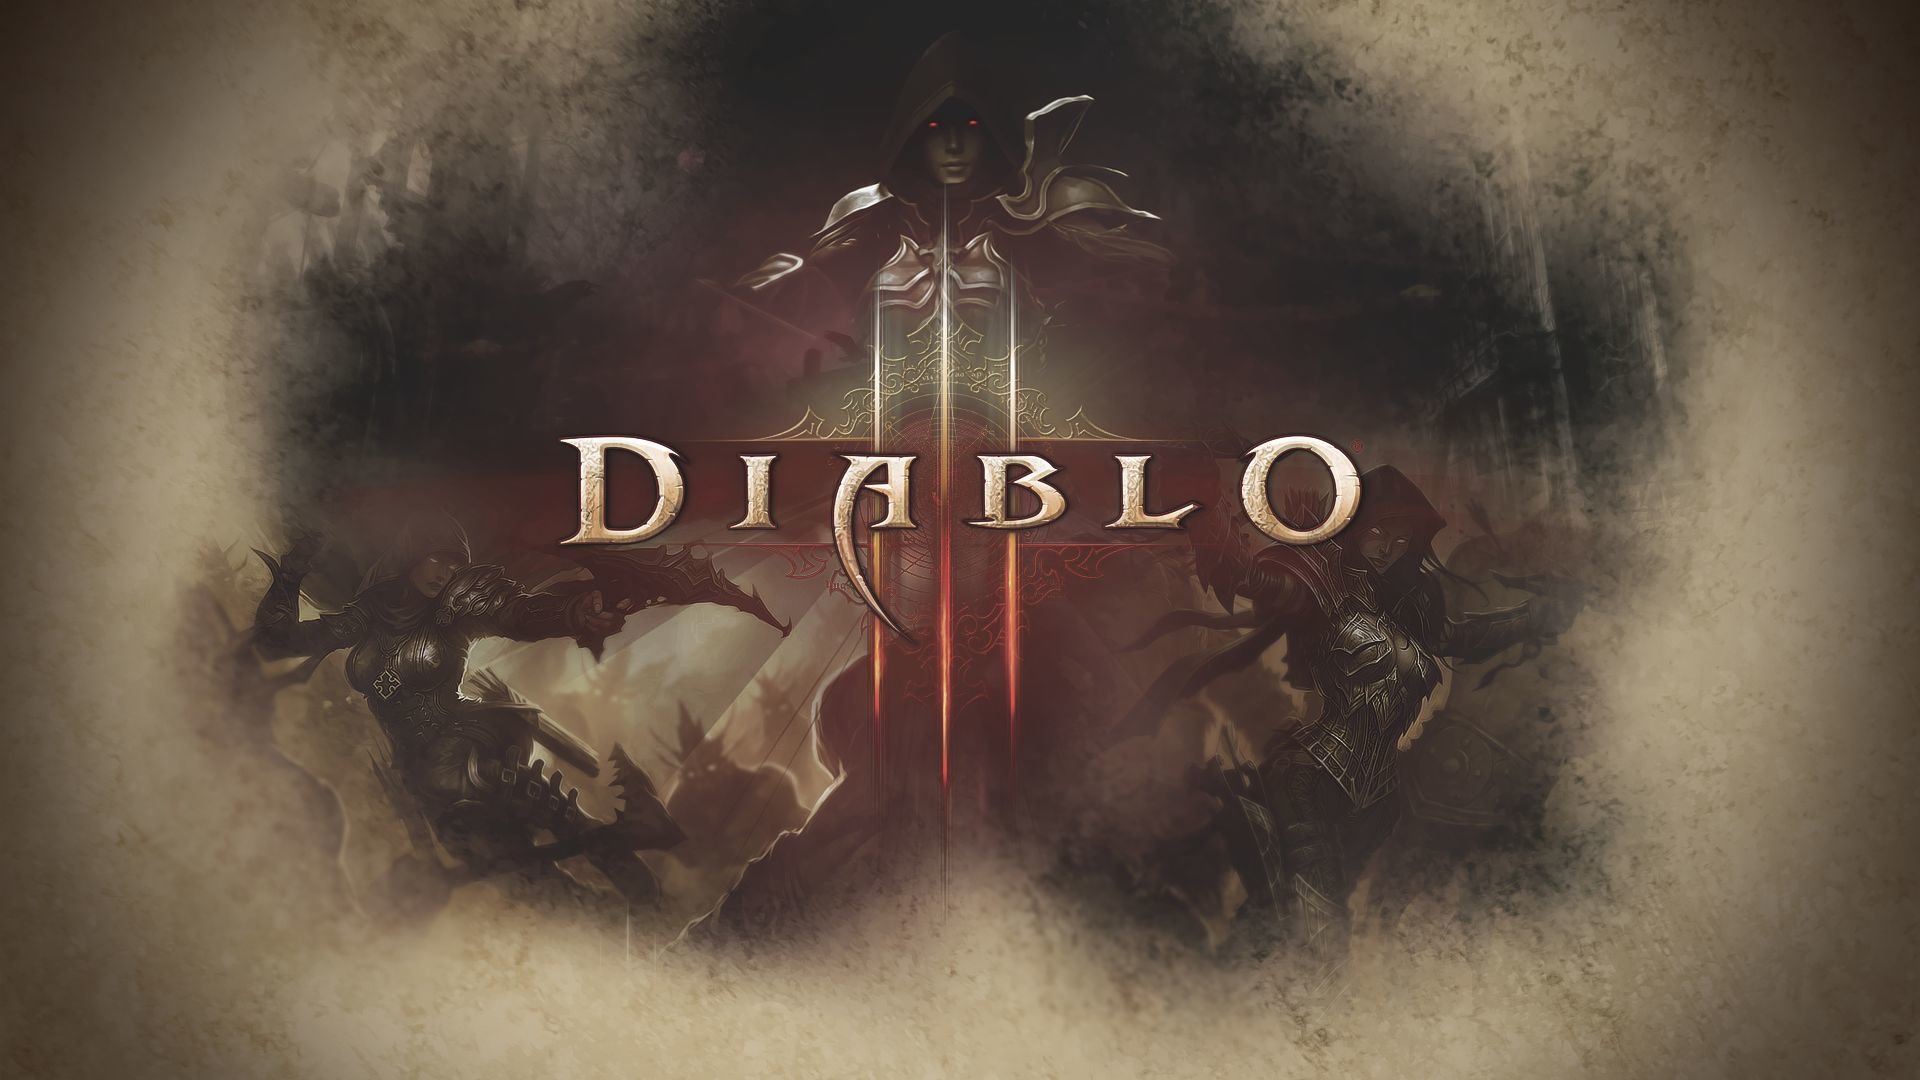 Free download Diablo 3 wallpaper ID:30848 1080p for computer